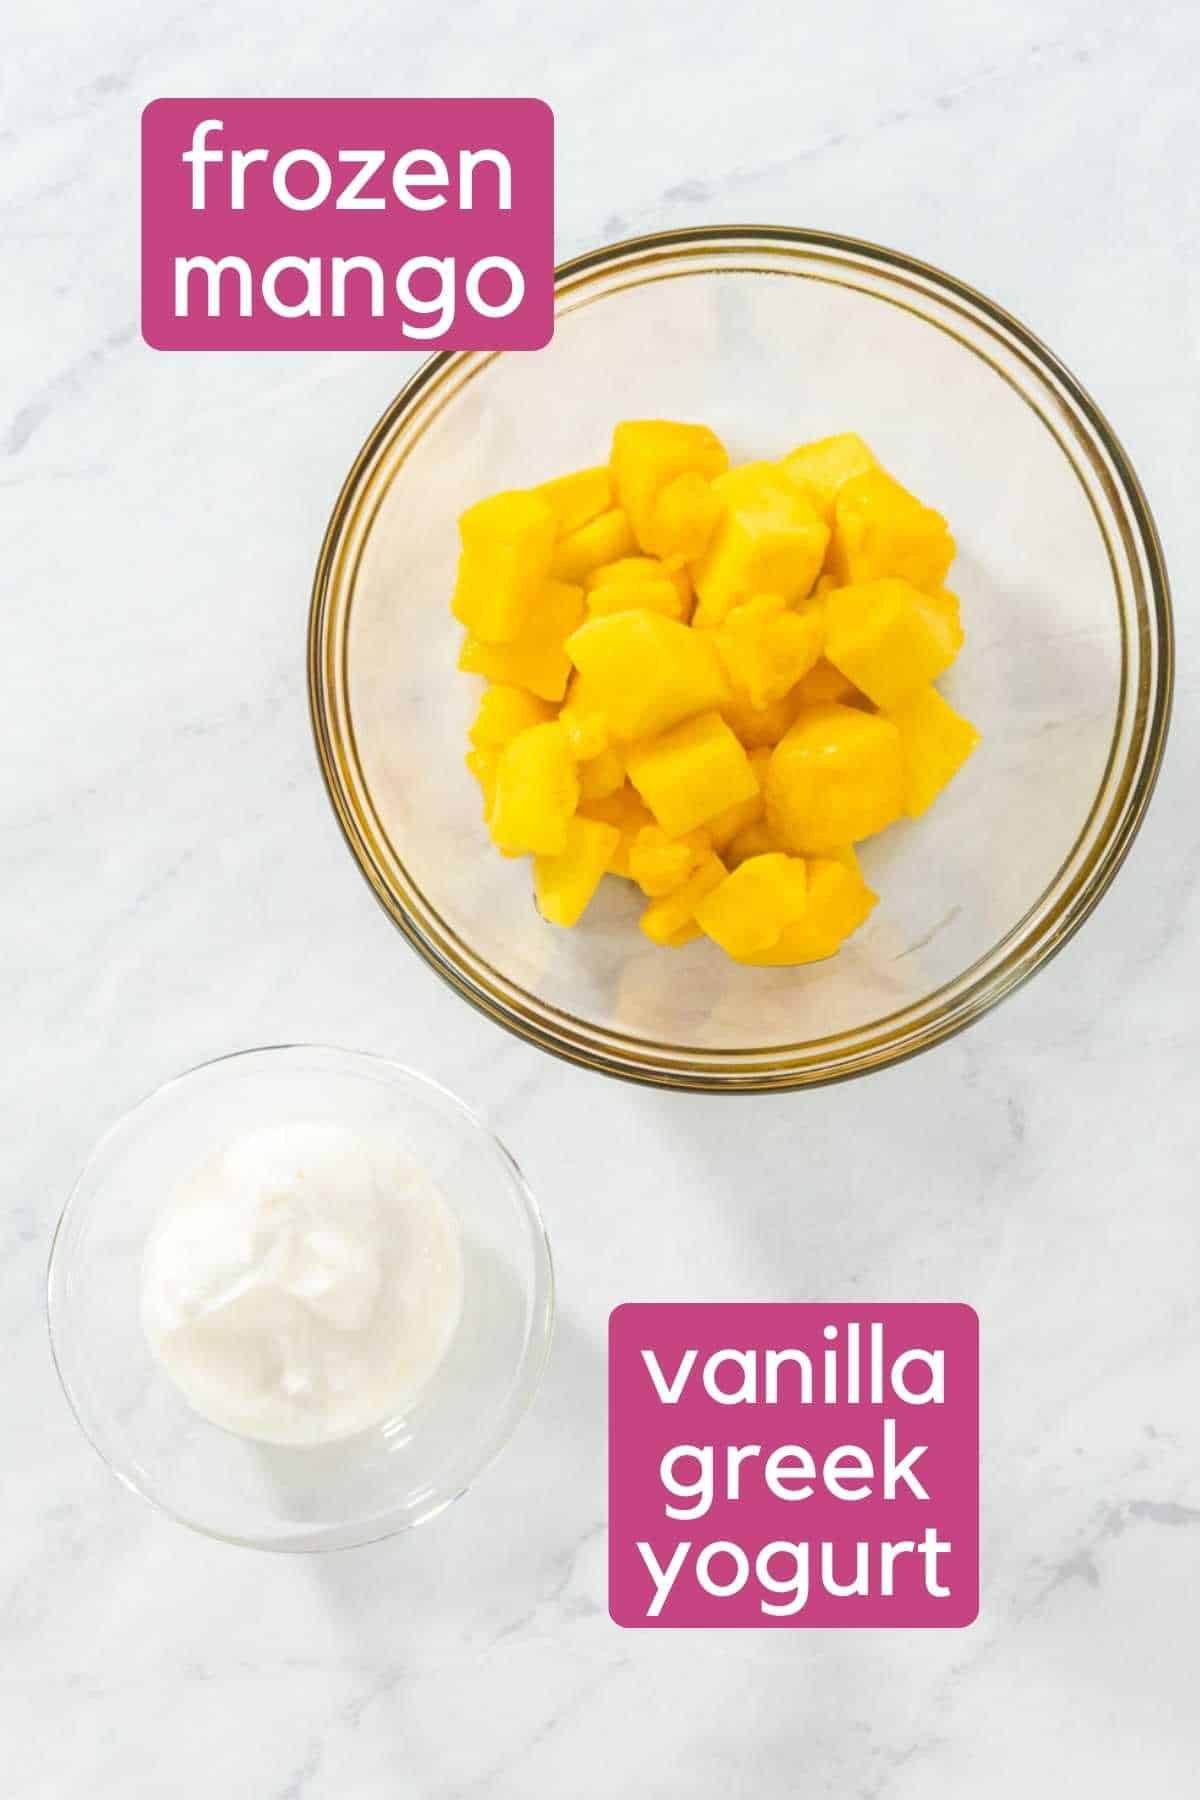 The ingredients needed to make mango pops: frozen mango chunks and vanilla greek yogurt.